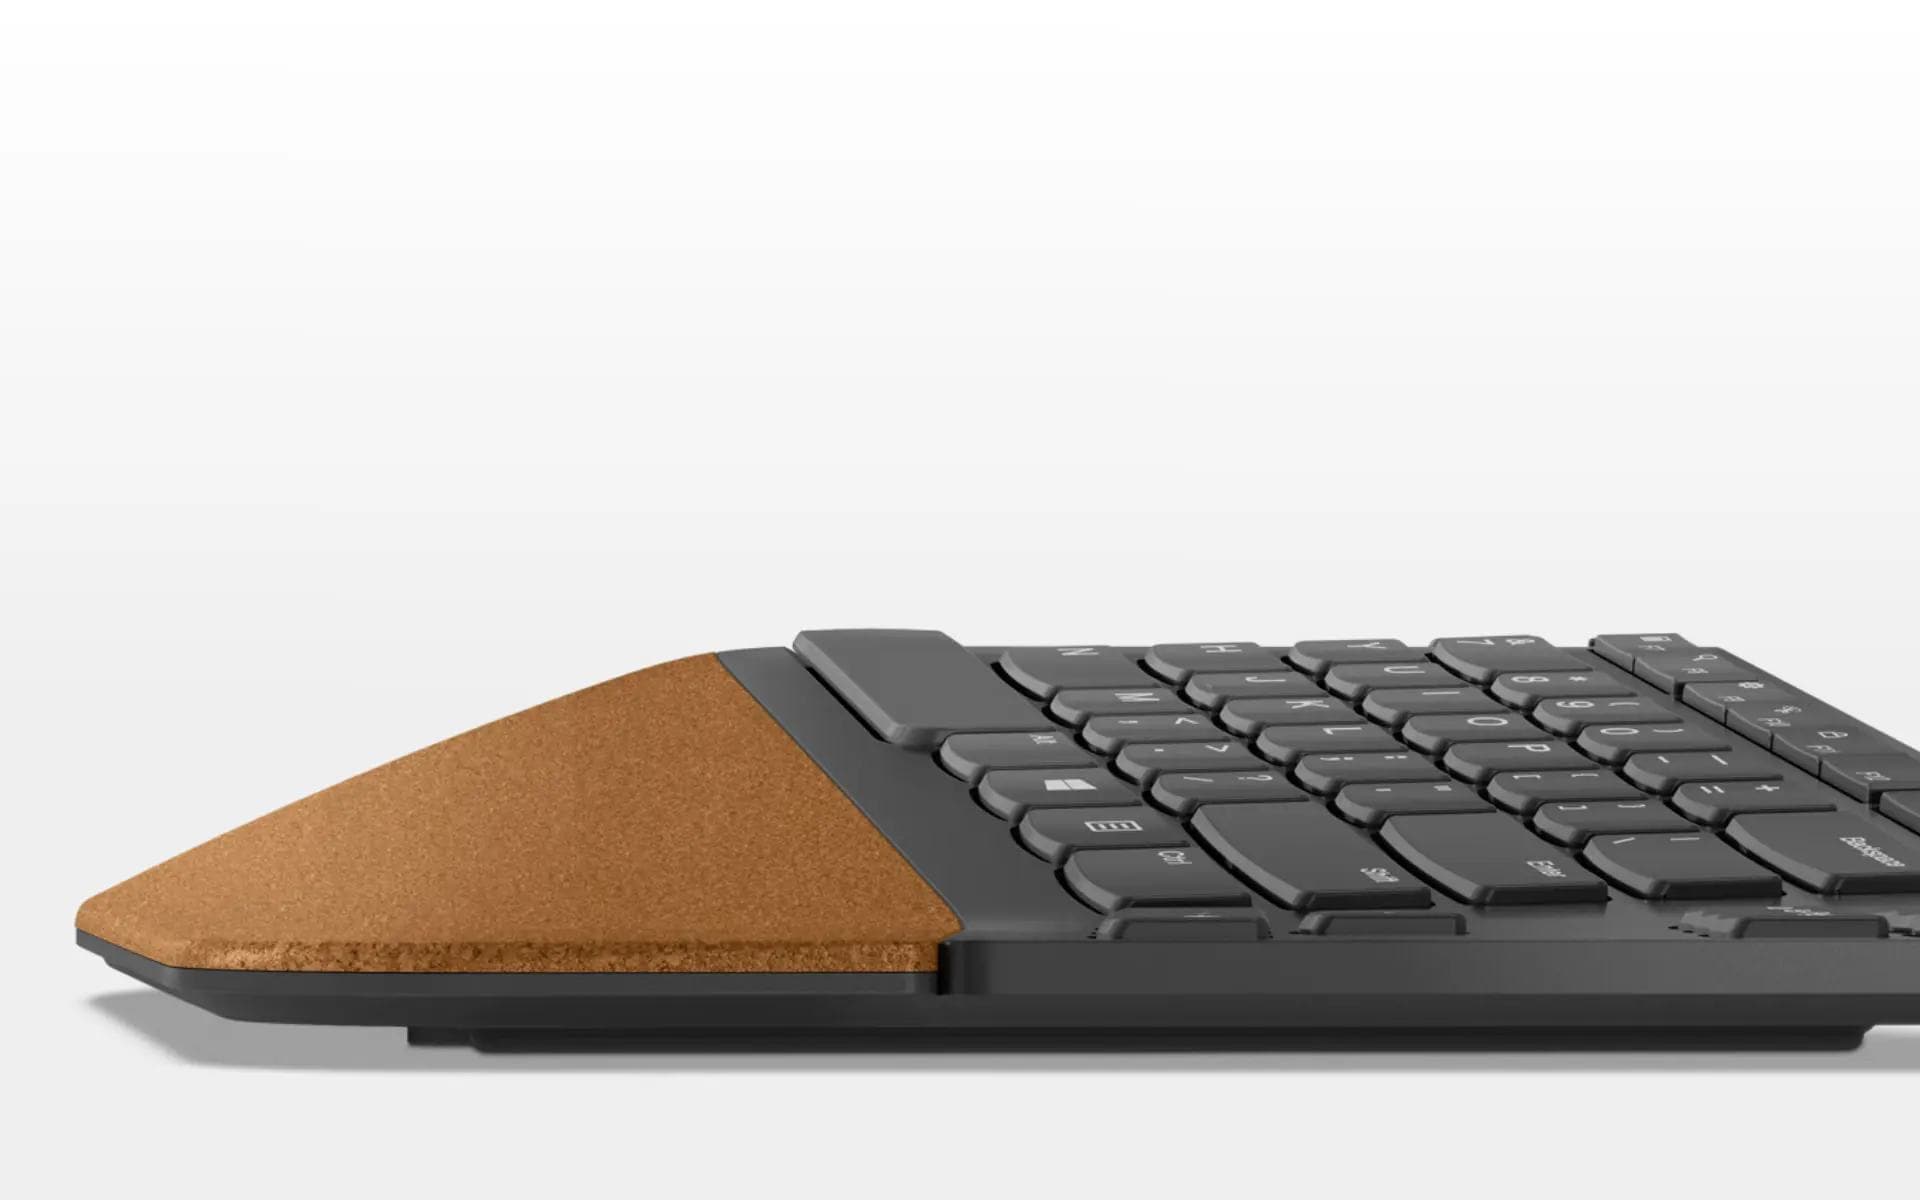 Бездротова клавіатура Lenovo Go Wireless Split Keyboard